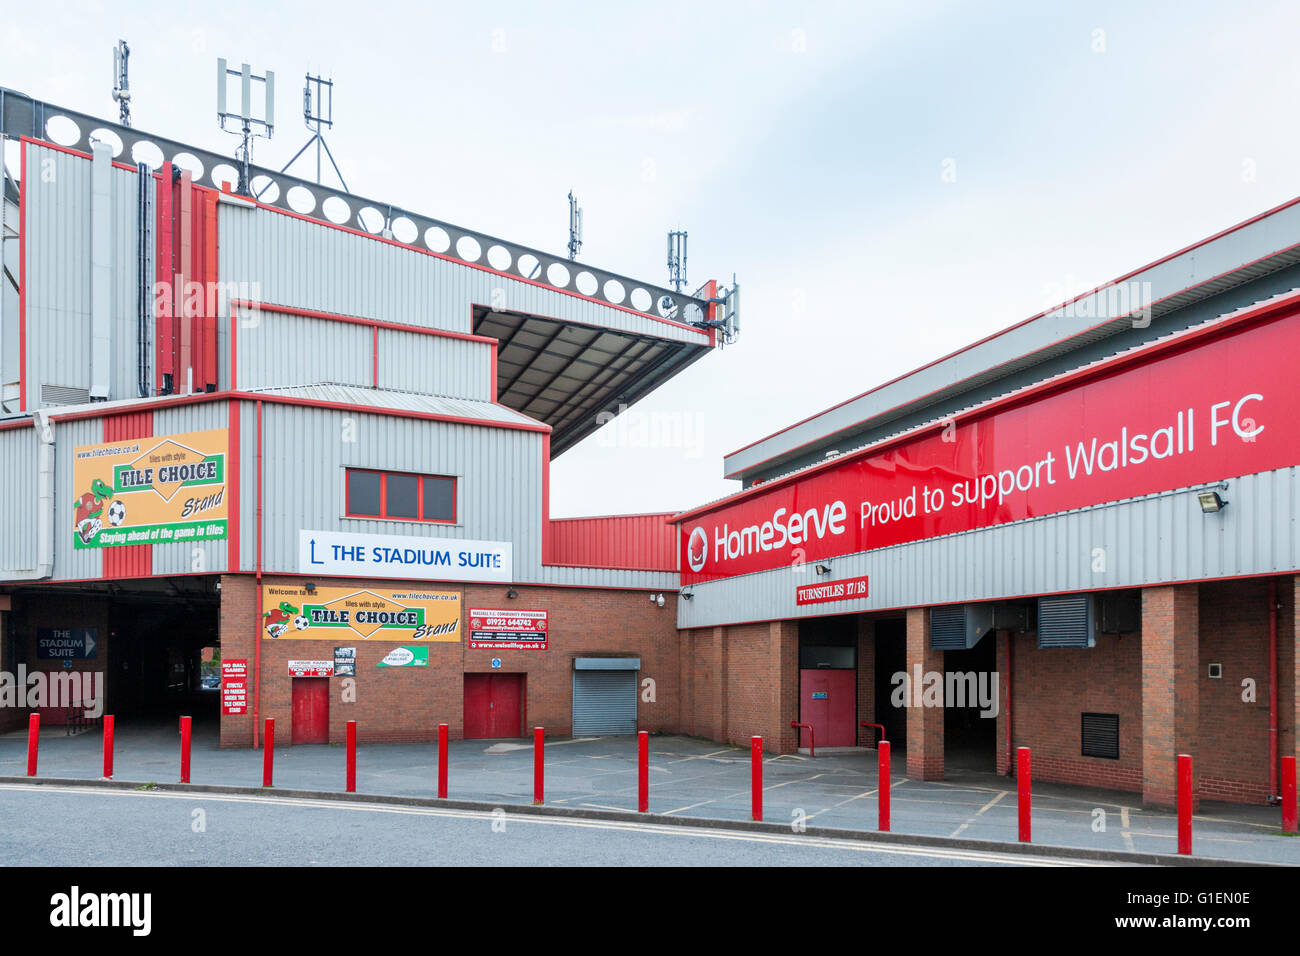 Le choix des carreaux Stand à Walsall FC terrain de football, du stade de banques, Bescot, Walsall, West Midlands, England, UK Banque D'Images